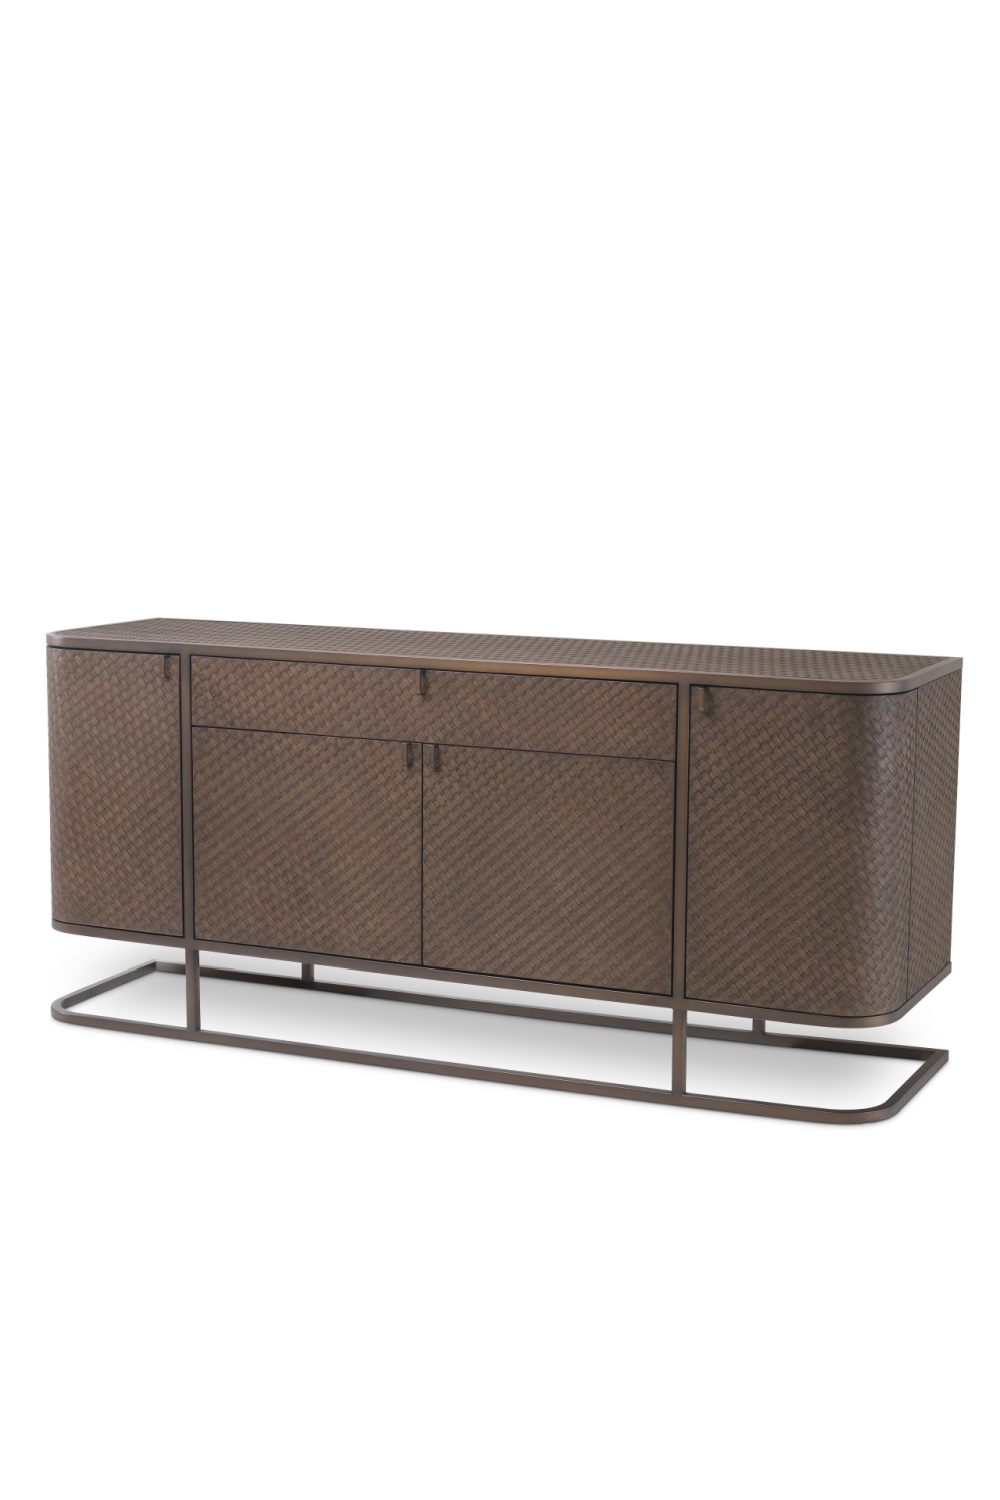 Woven Oak Dresser | Eichholtz Napa Valley | #1 Eichholtz Retailer